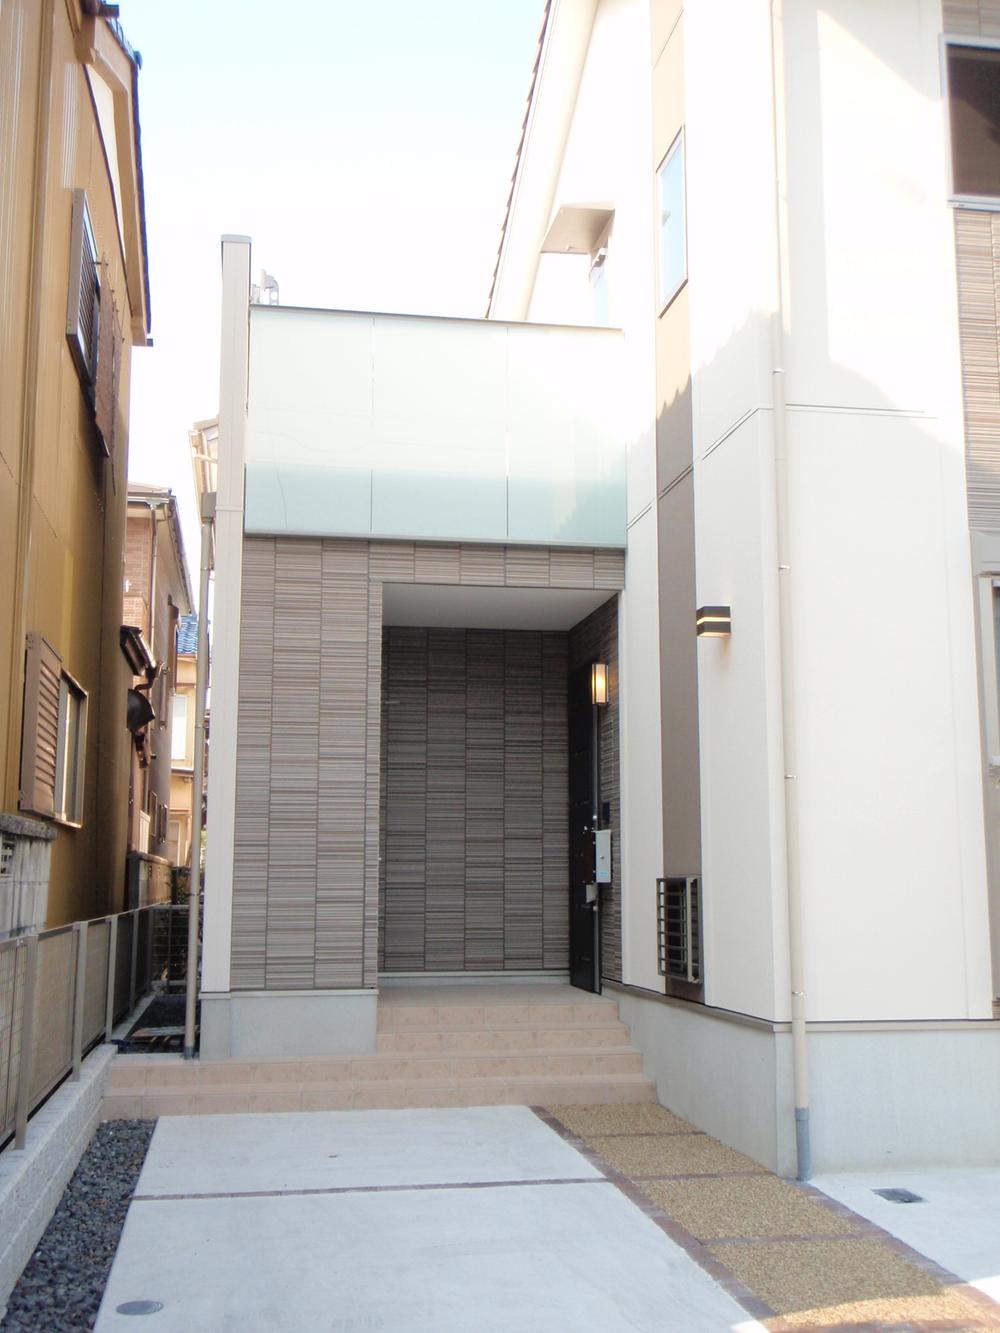 Entrance. A building: modern and stylish entrance